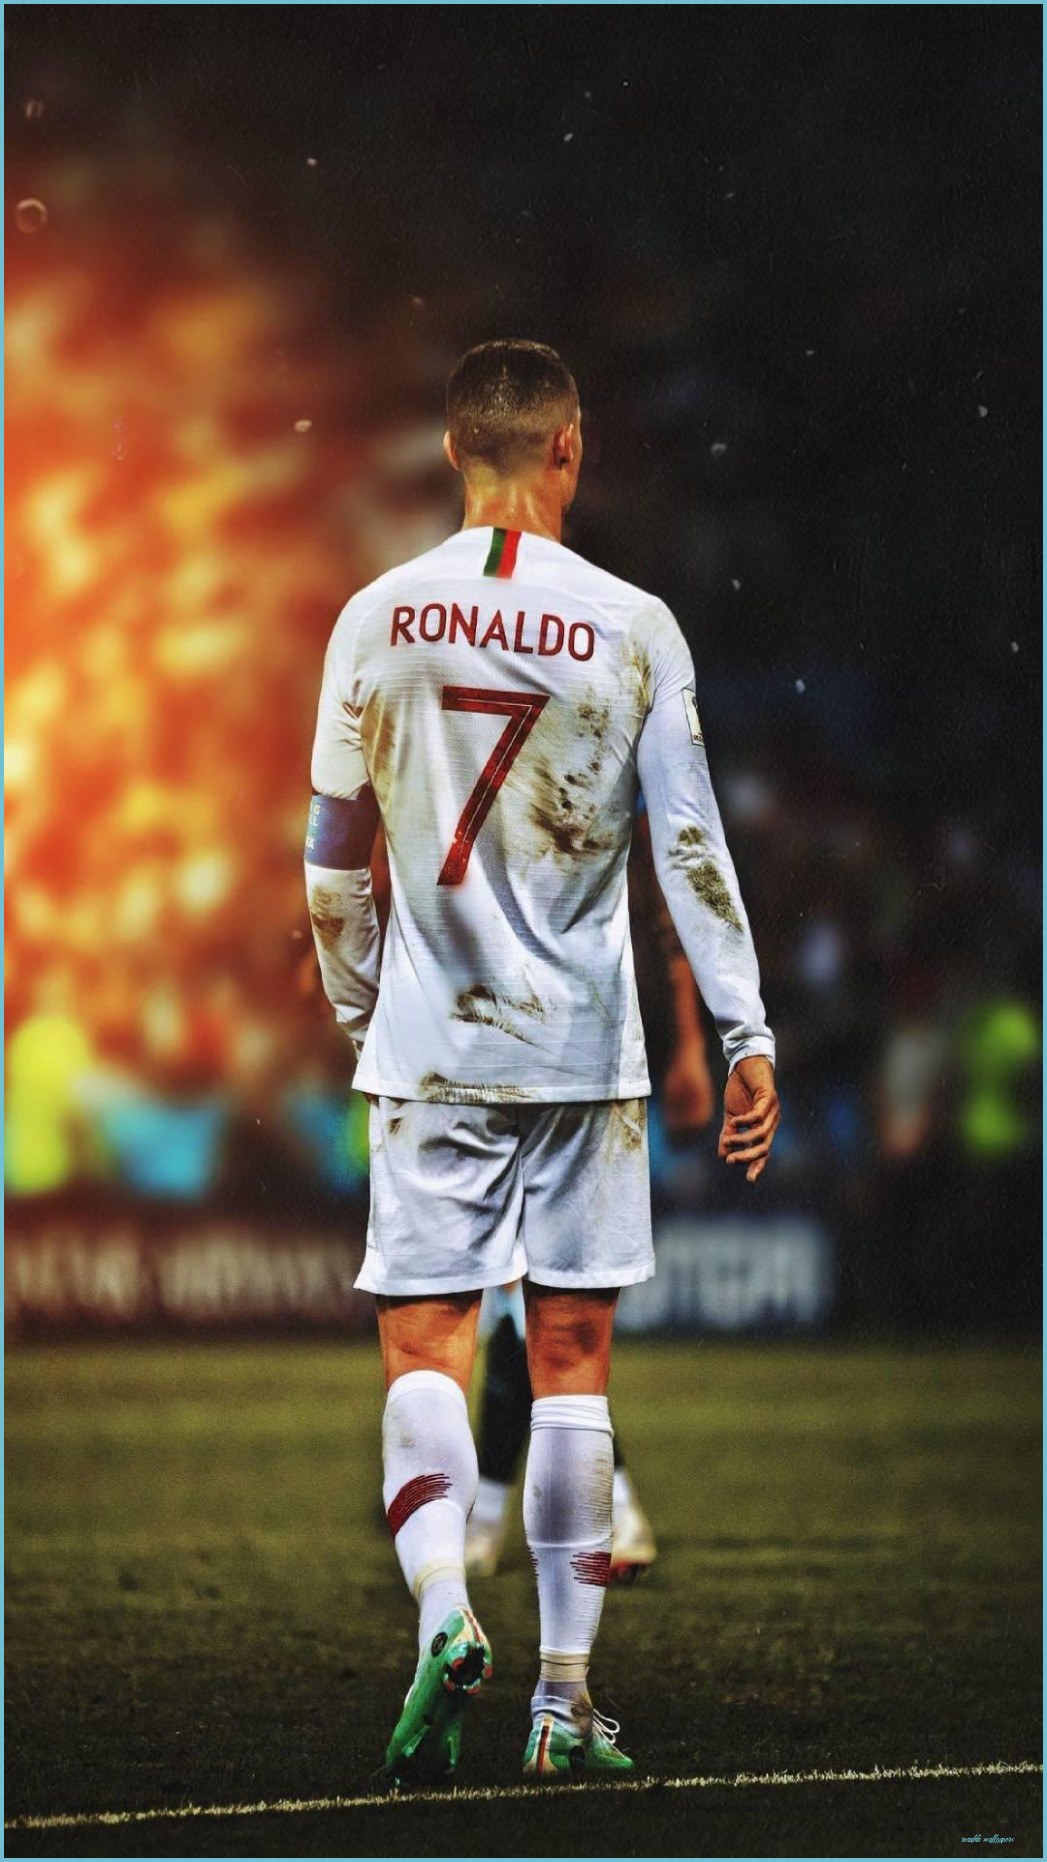 What Makes Ronaldo Wallpaper So Addictive That You Never